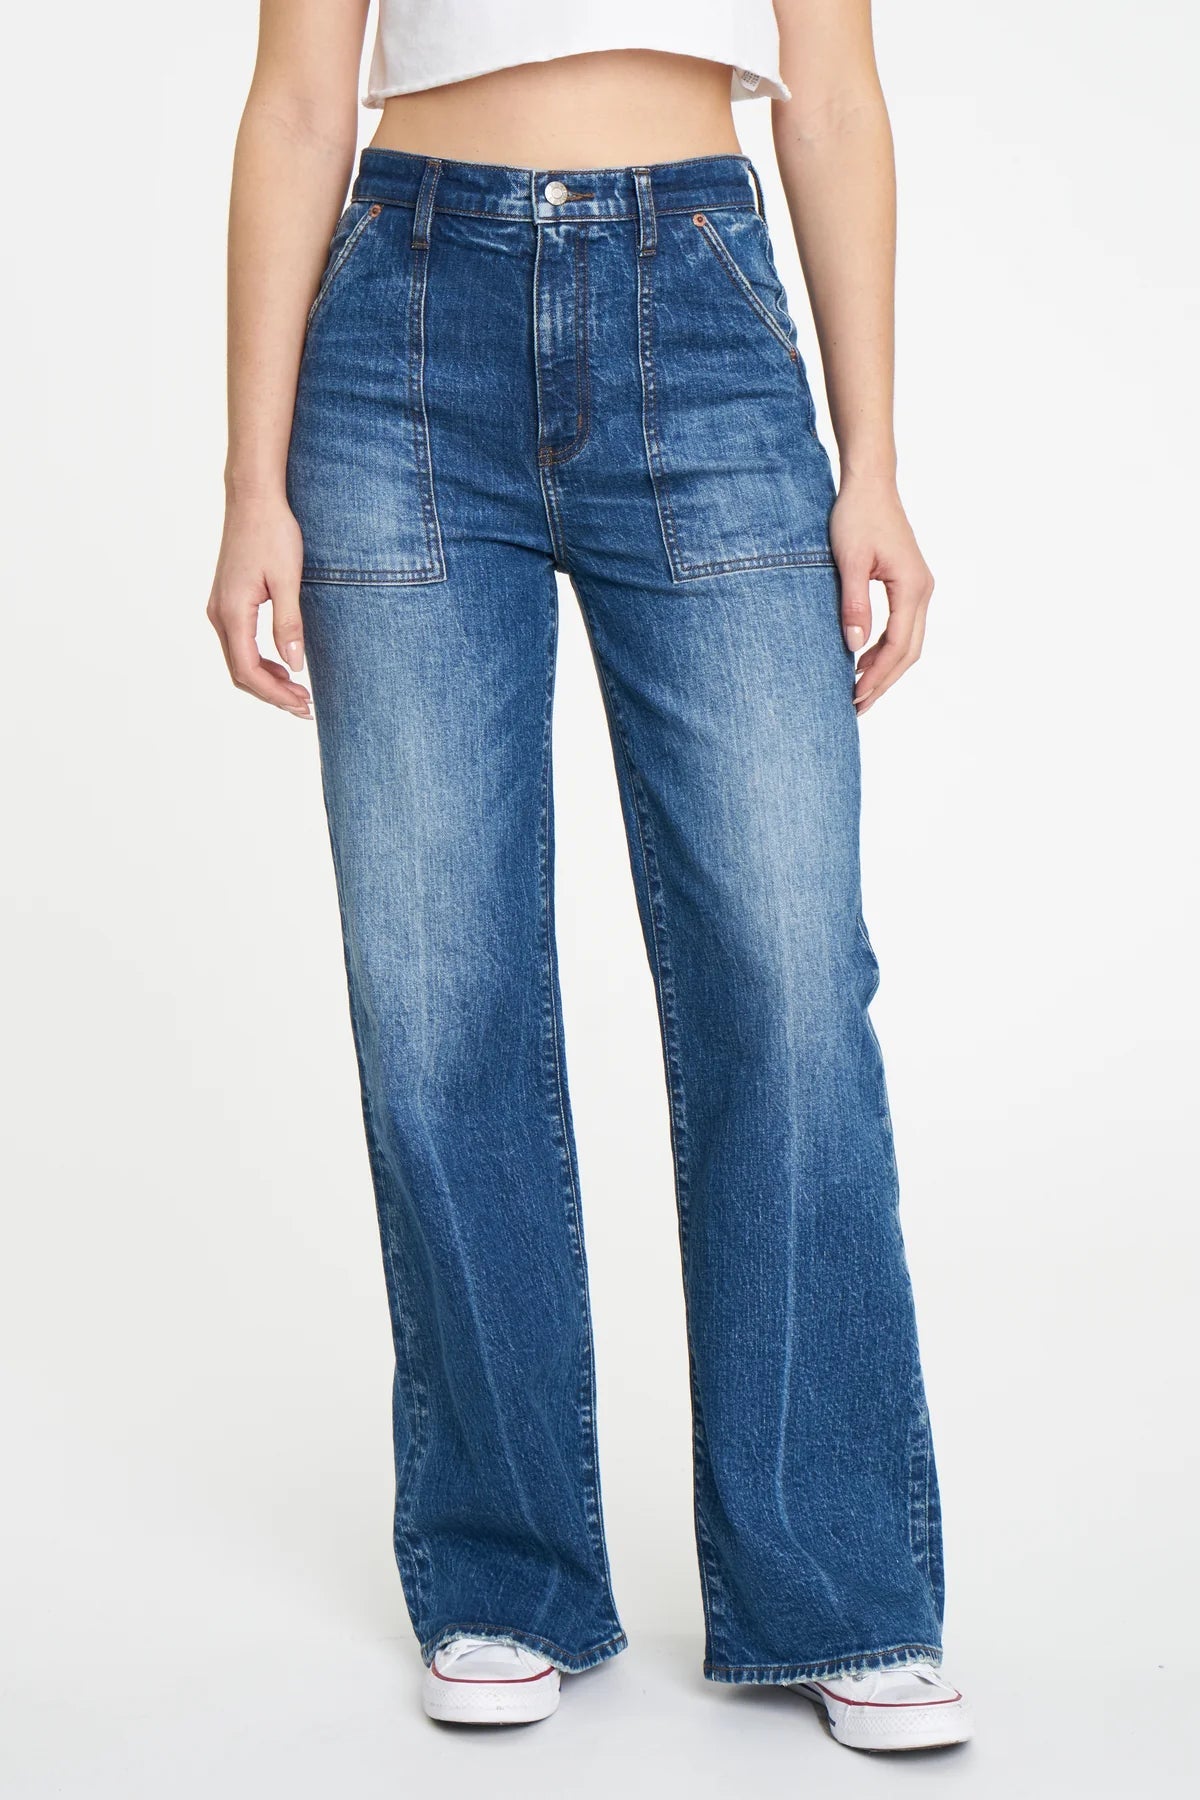 Daze Denim | Far Out Wide Leg Utility Jeans | Medium Wash - Women&#39;s Pants - Blooming Daily